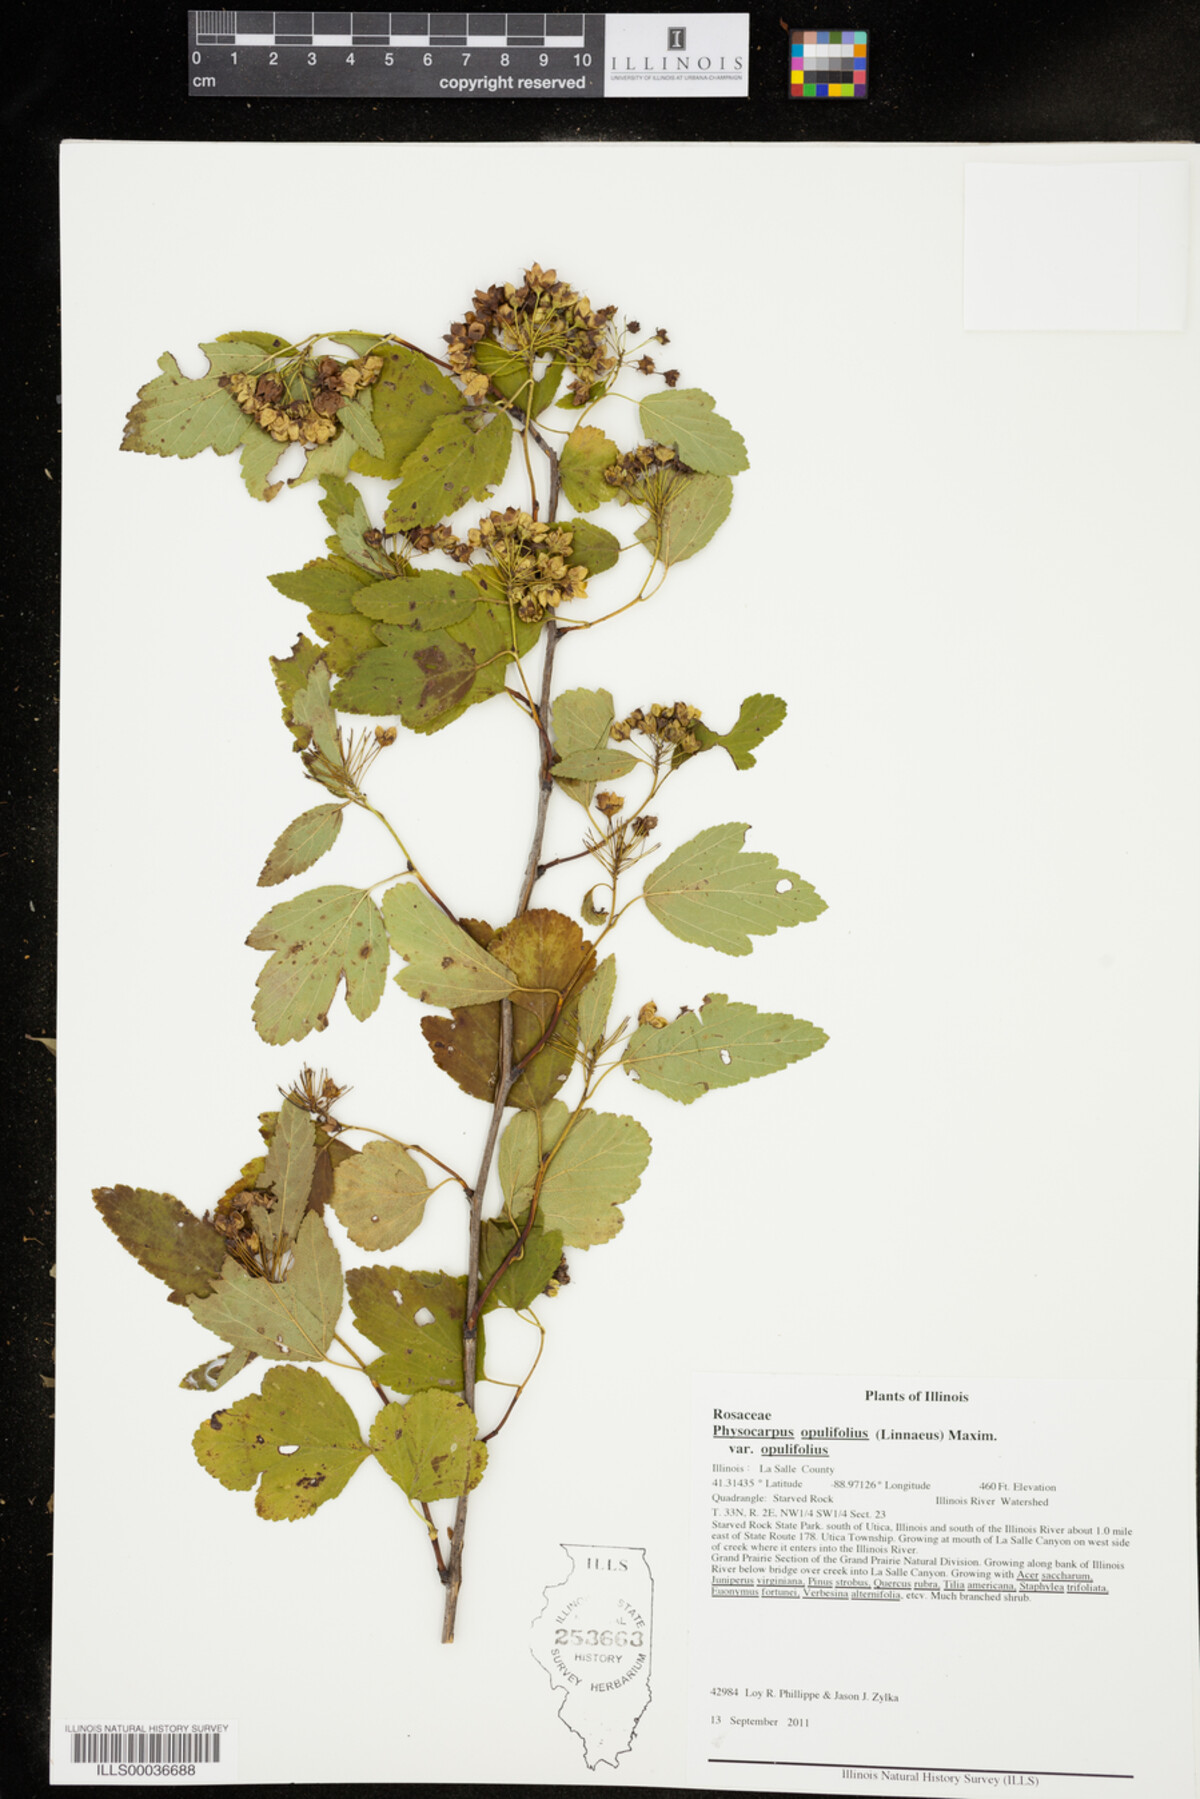 Physocarpus image